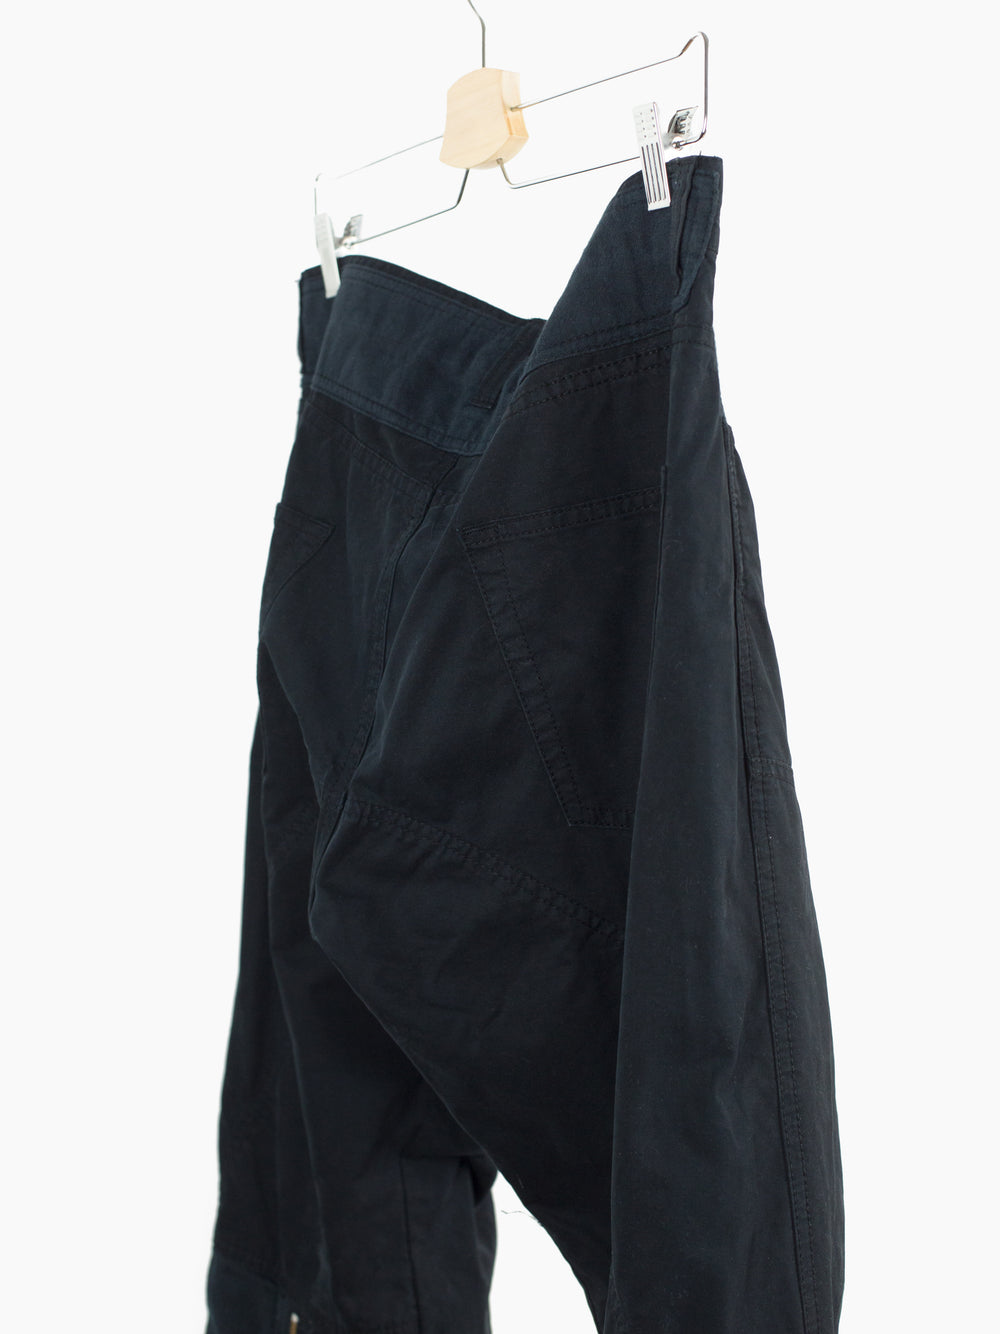 Yohji Yamamoto Y's x Aspesi Asymmetrical Backzip Articulated Trousers